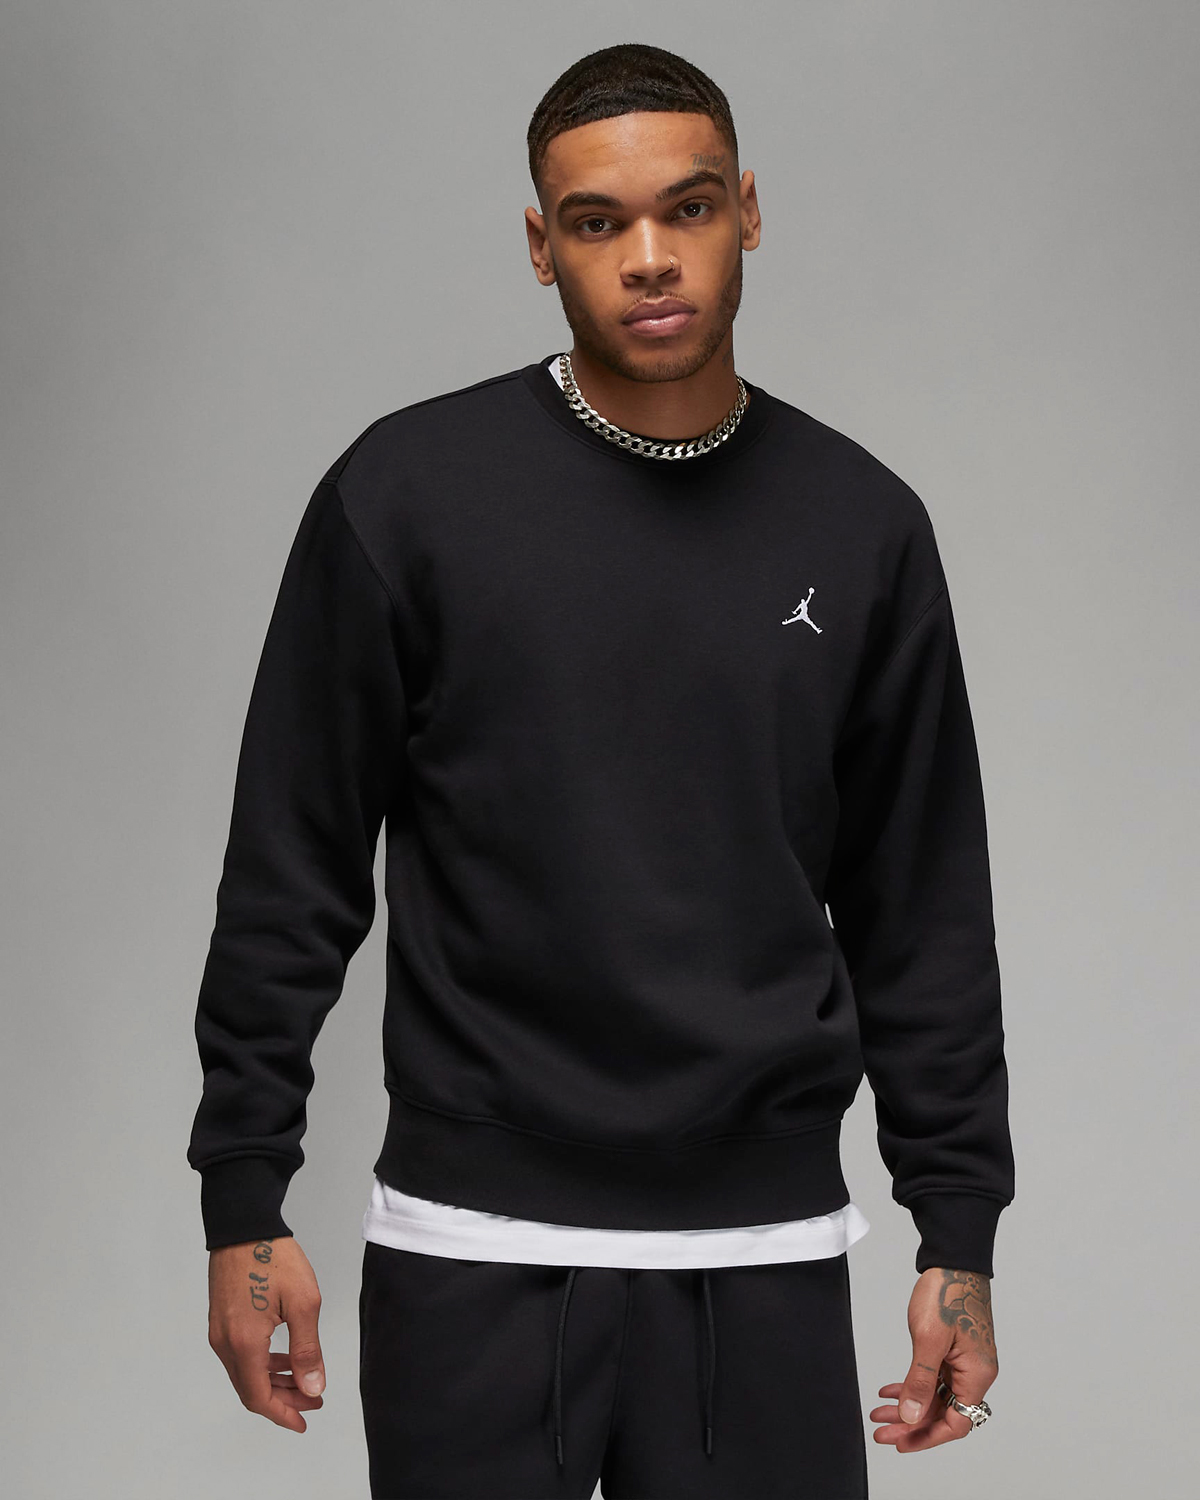 Jordan-Essentials-Sweatshirt-Black-White